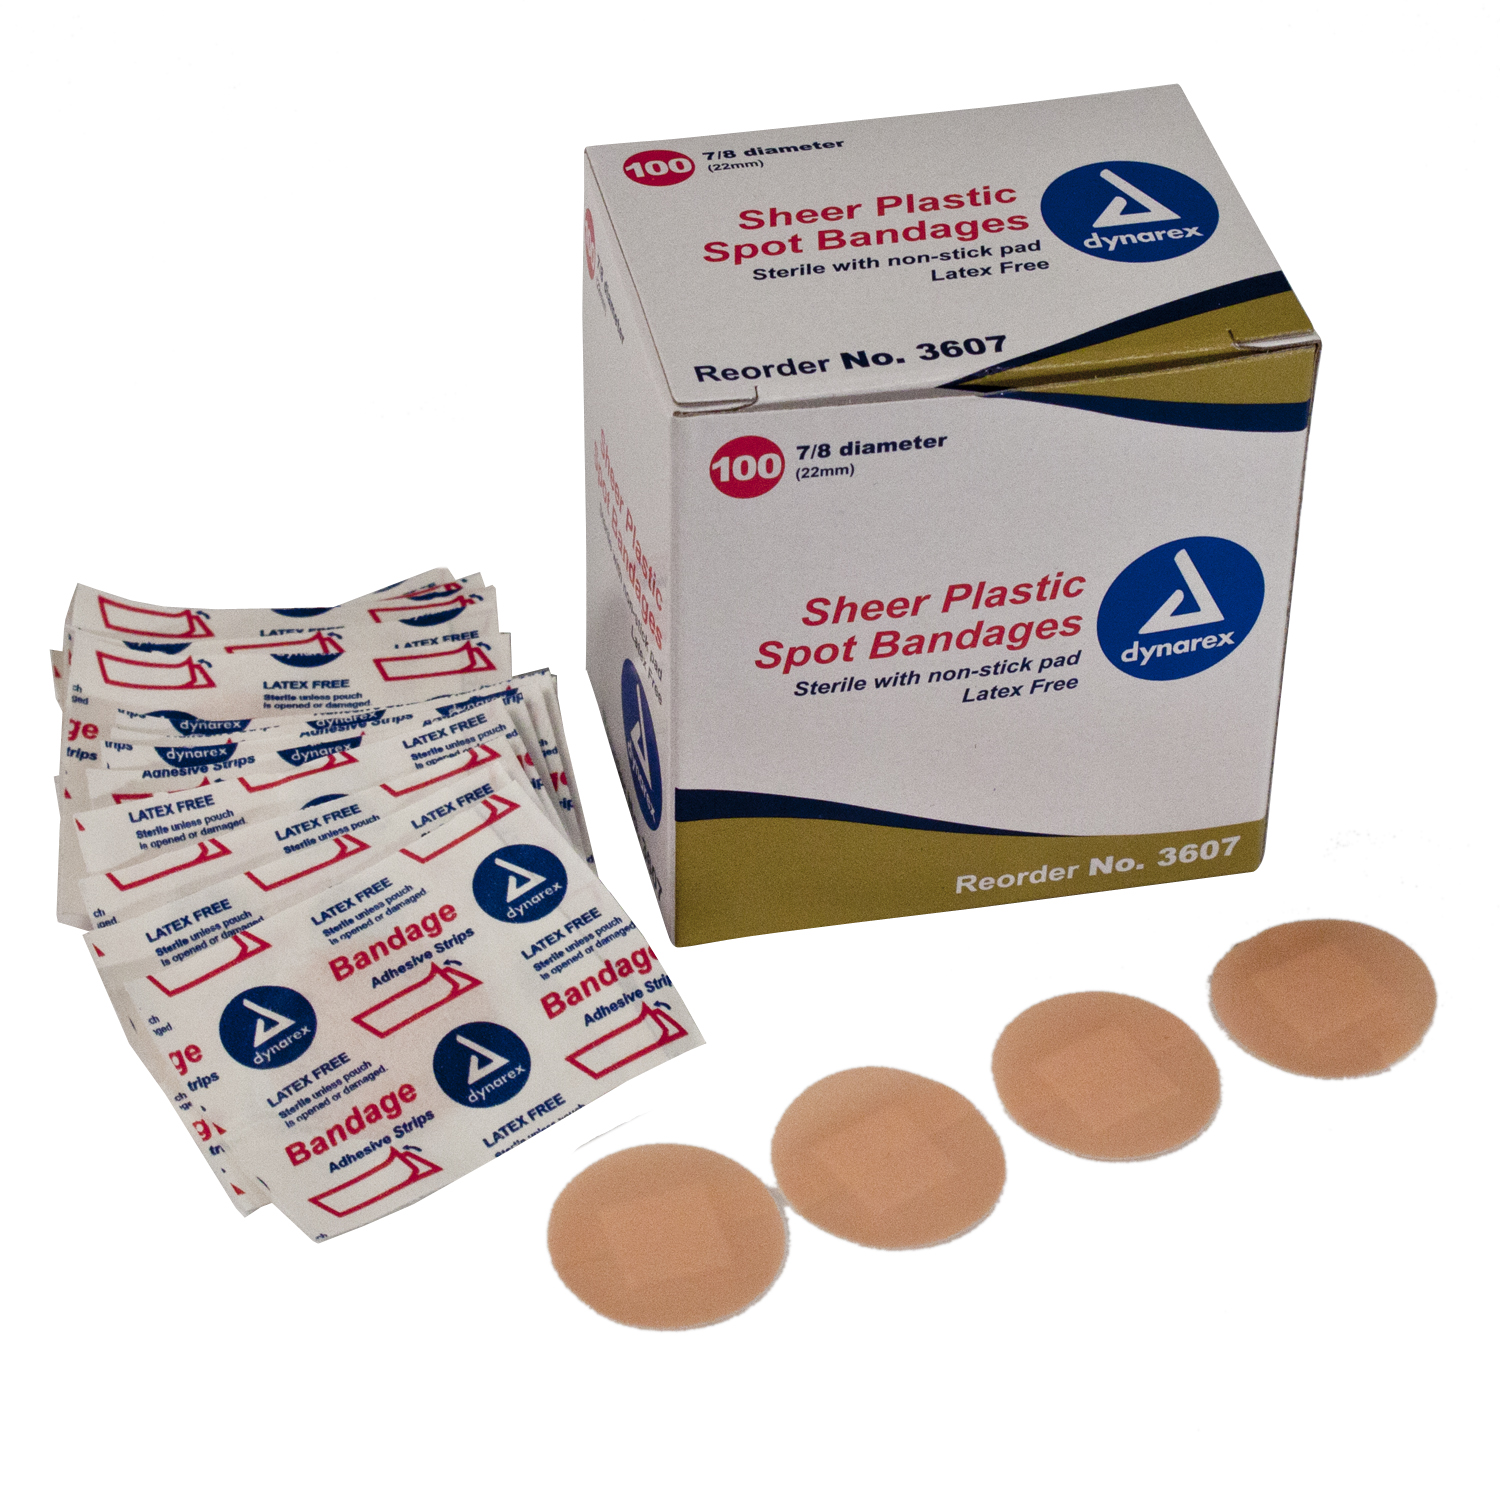 Sheer Plastic Spot Bandages (Box of 100)